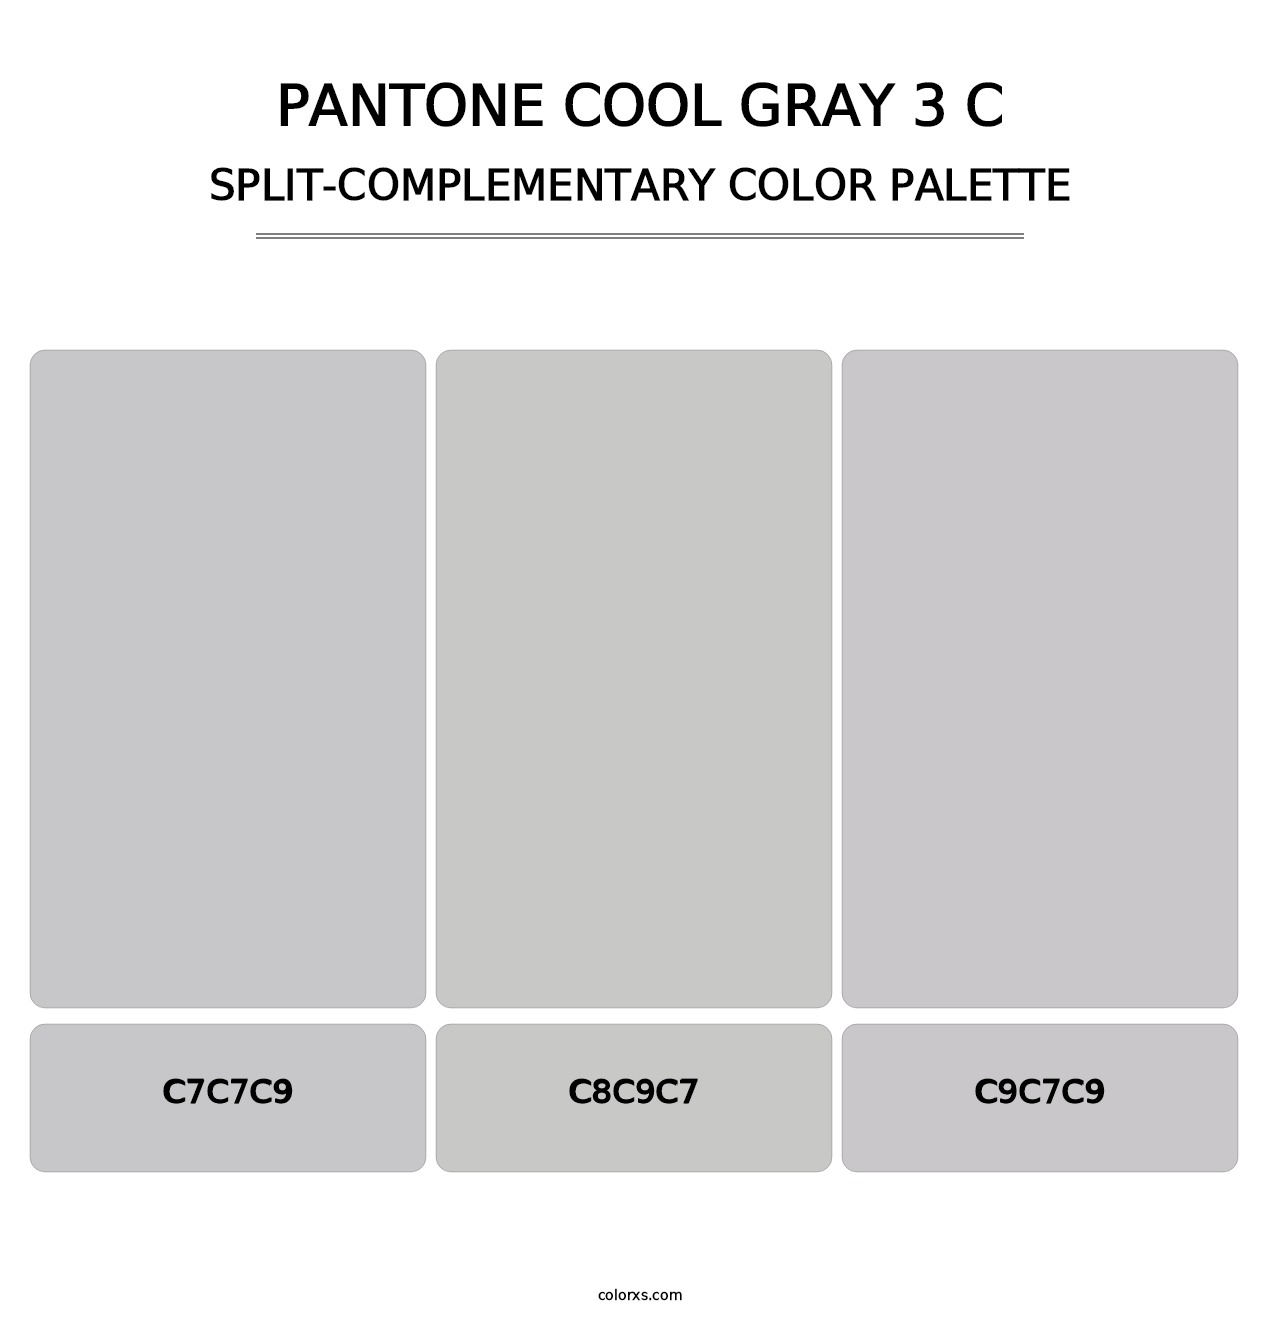 PANTONE Cool Gray 3 C - Split-Complementary Color Palette